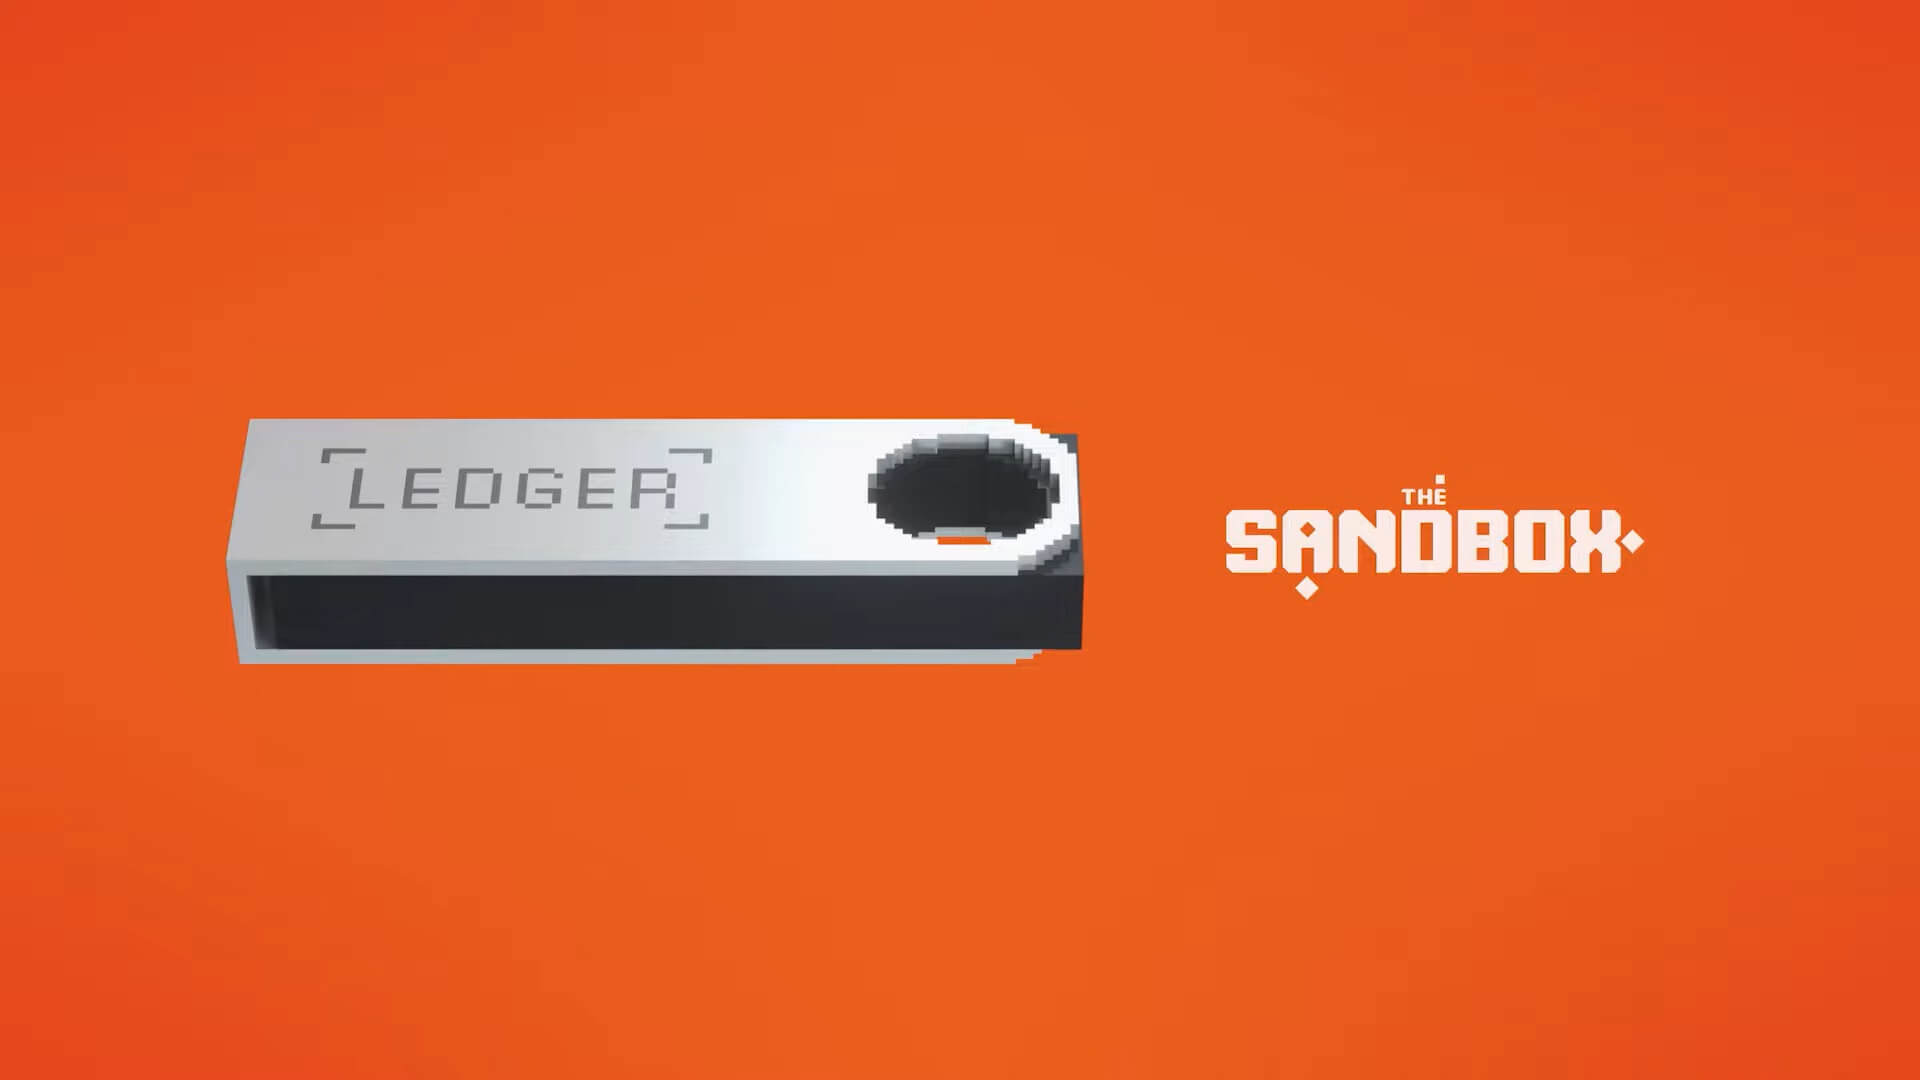 Ledger Partners with The Sandbox to Develop Ledgerverse